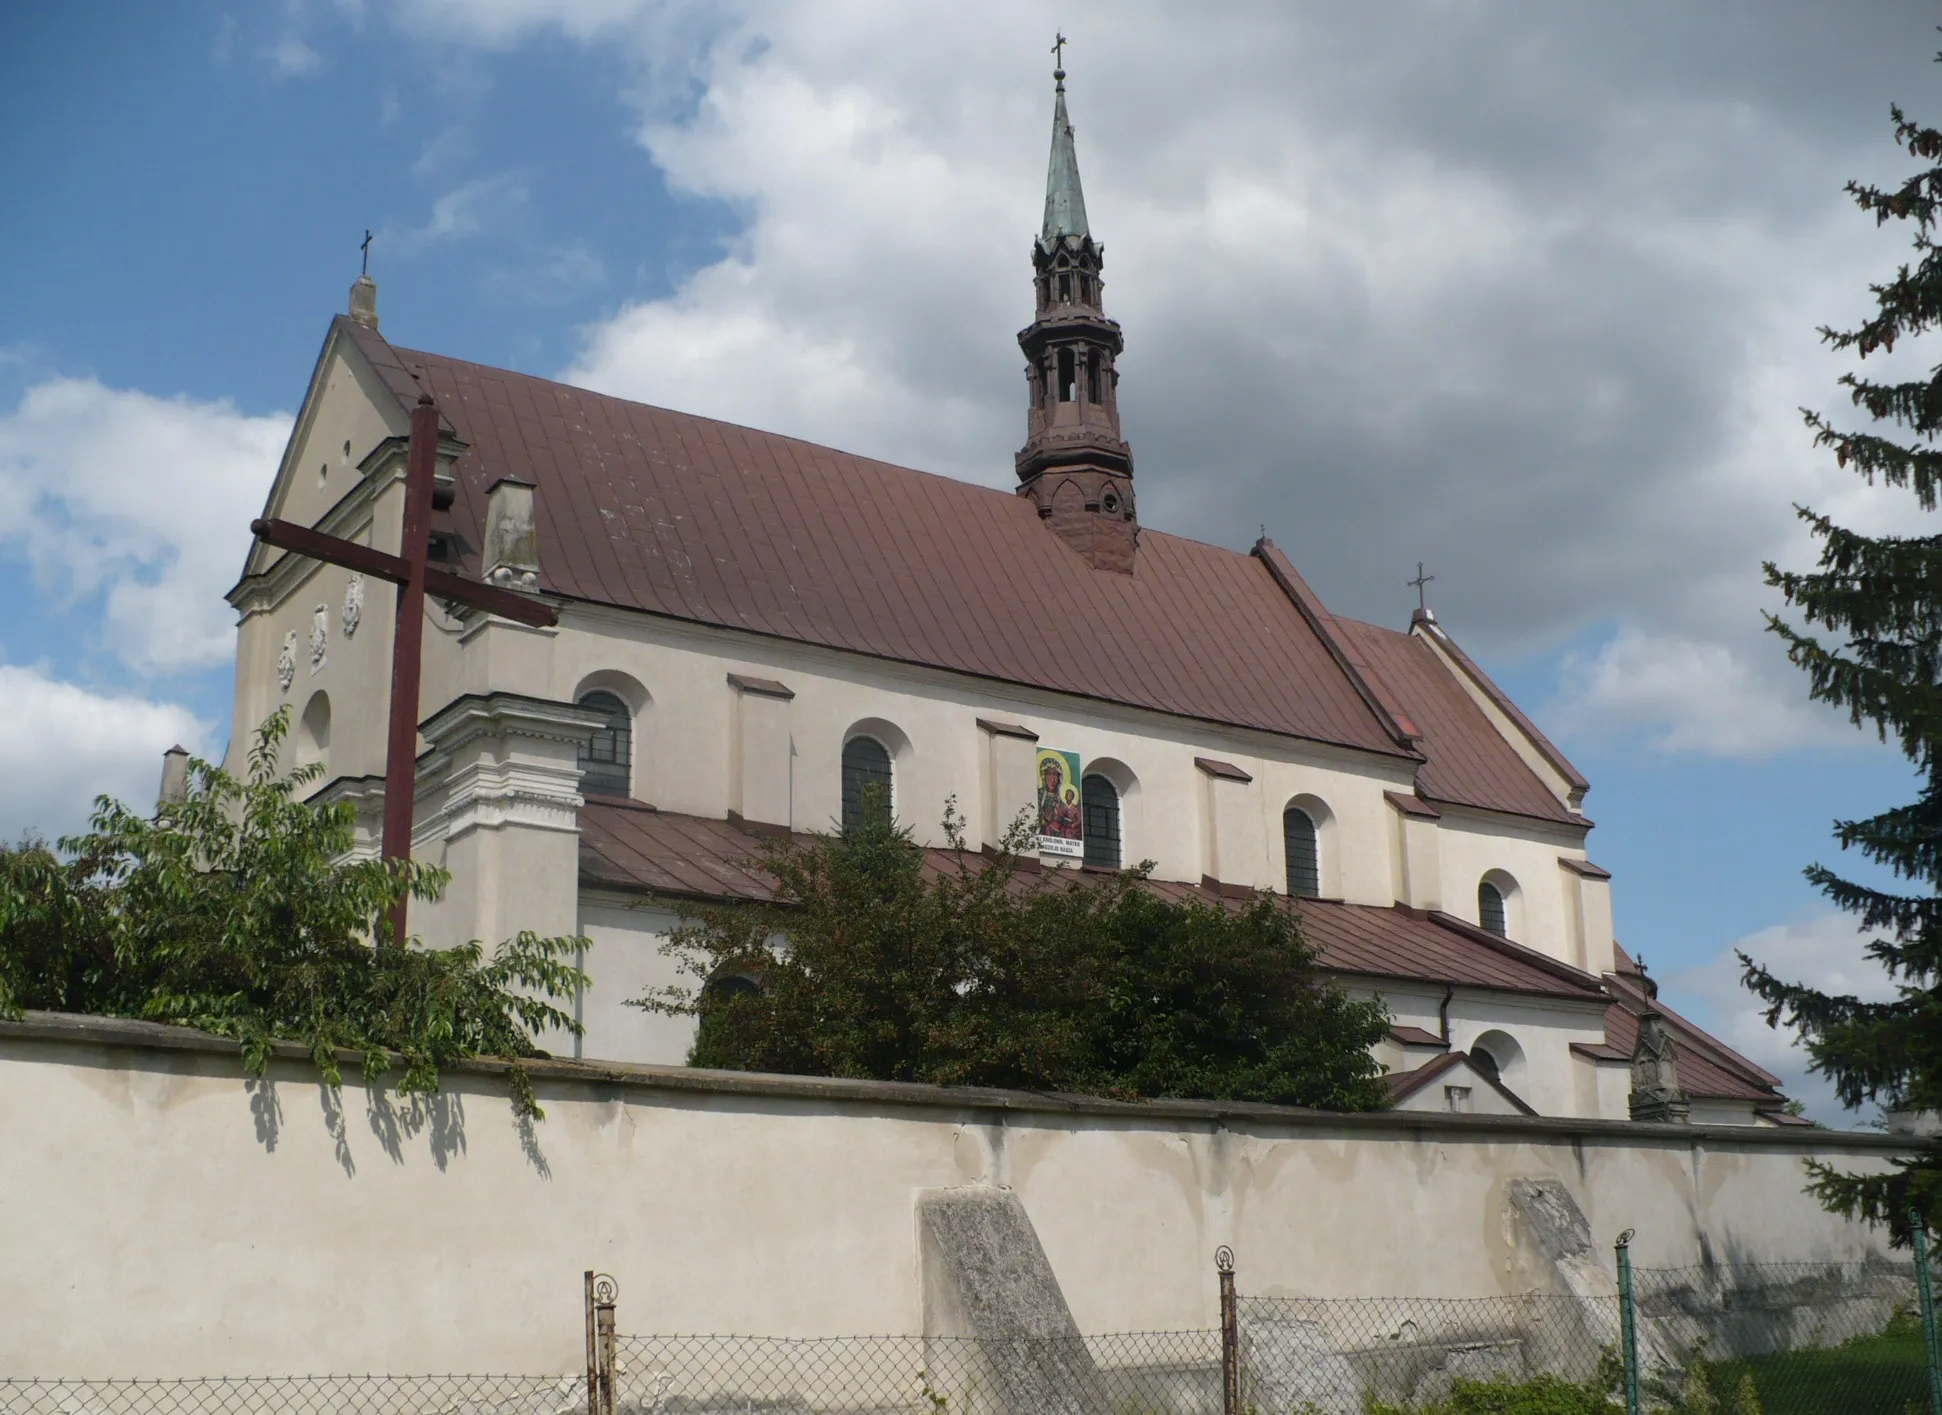 Photo showing: 17th century Holy Trinity church in Raków, Poland